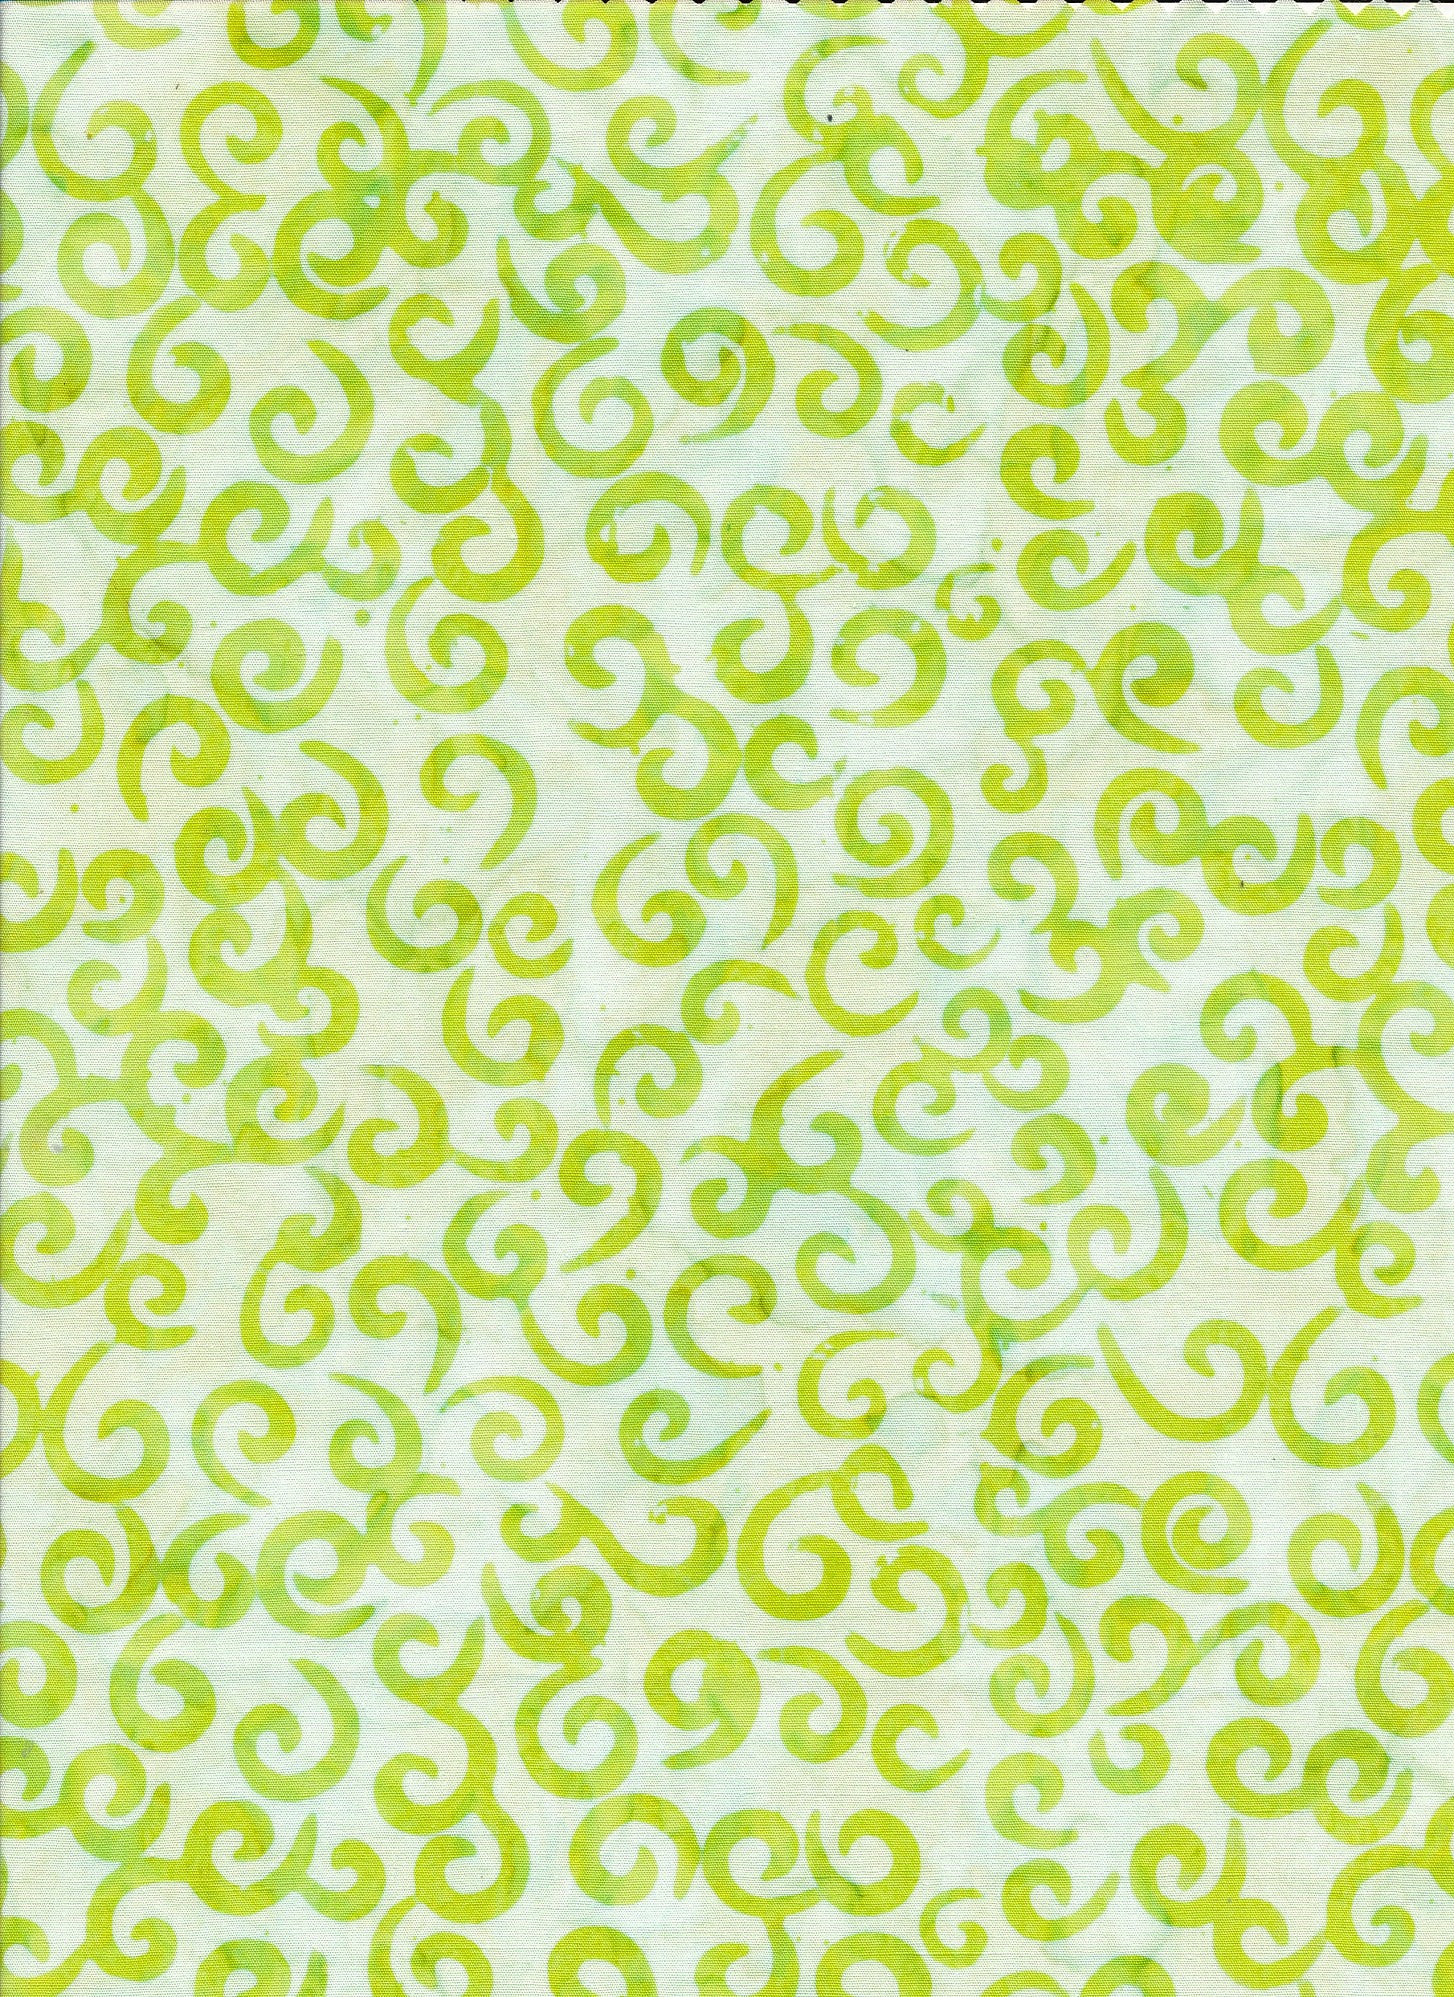 Majestic Batiks Quilt Fabric - Amsterdam Scrolls in Green on White - Amsterdam-907